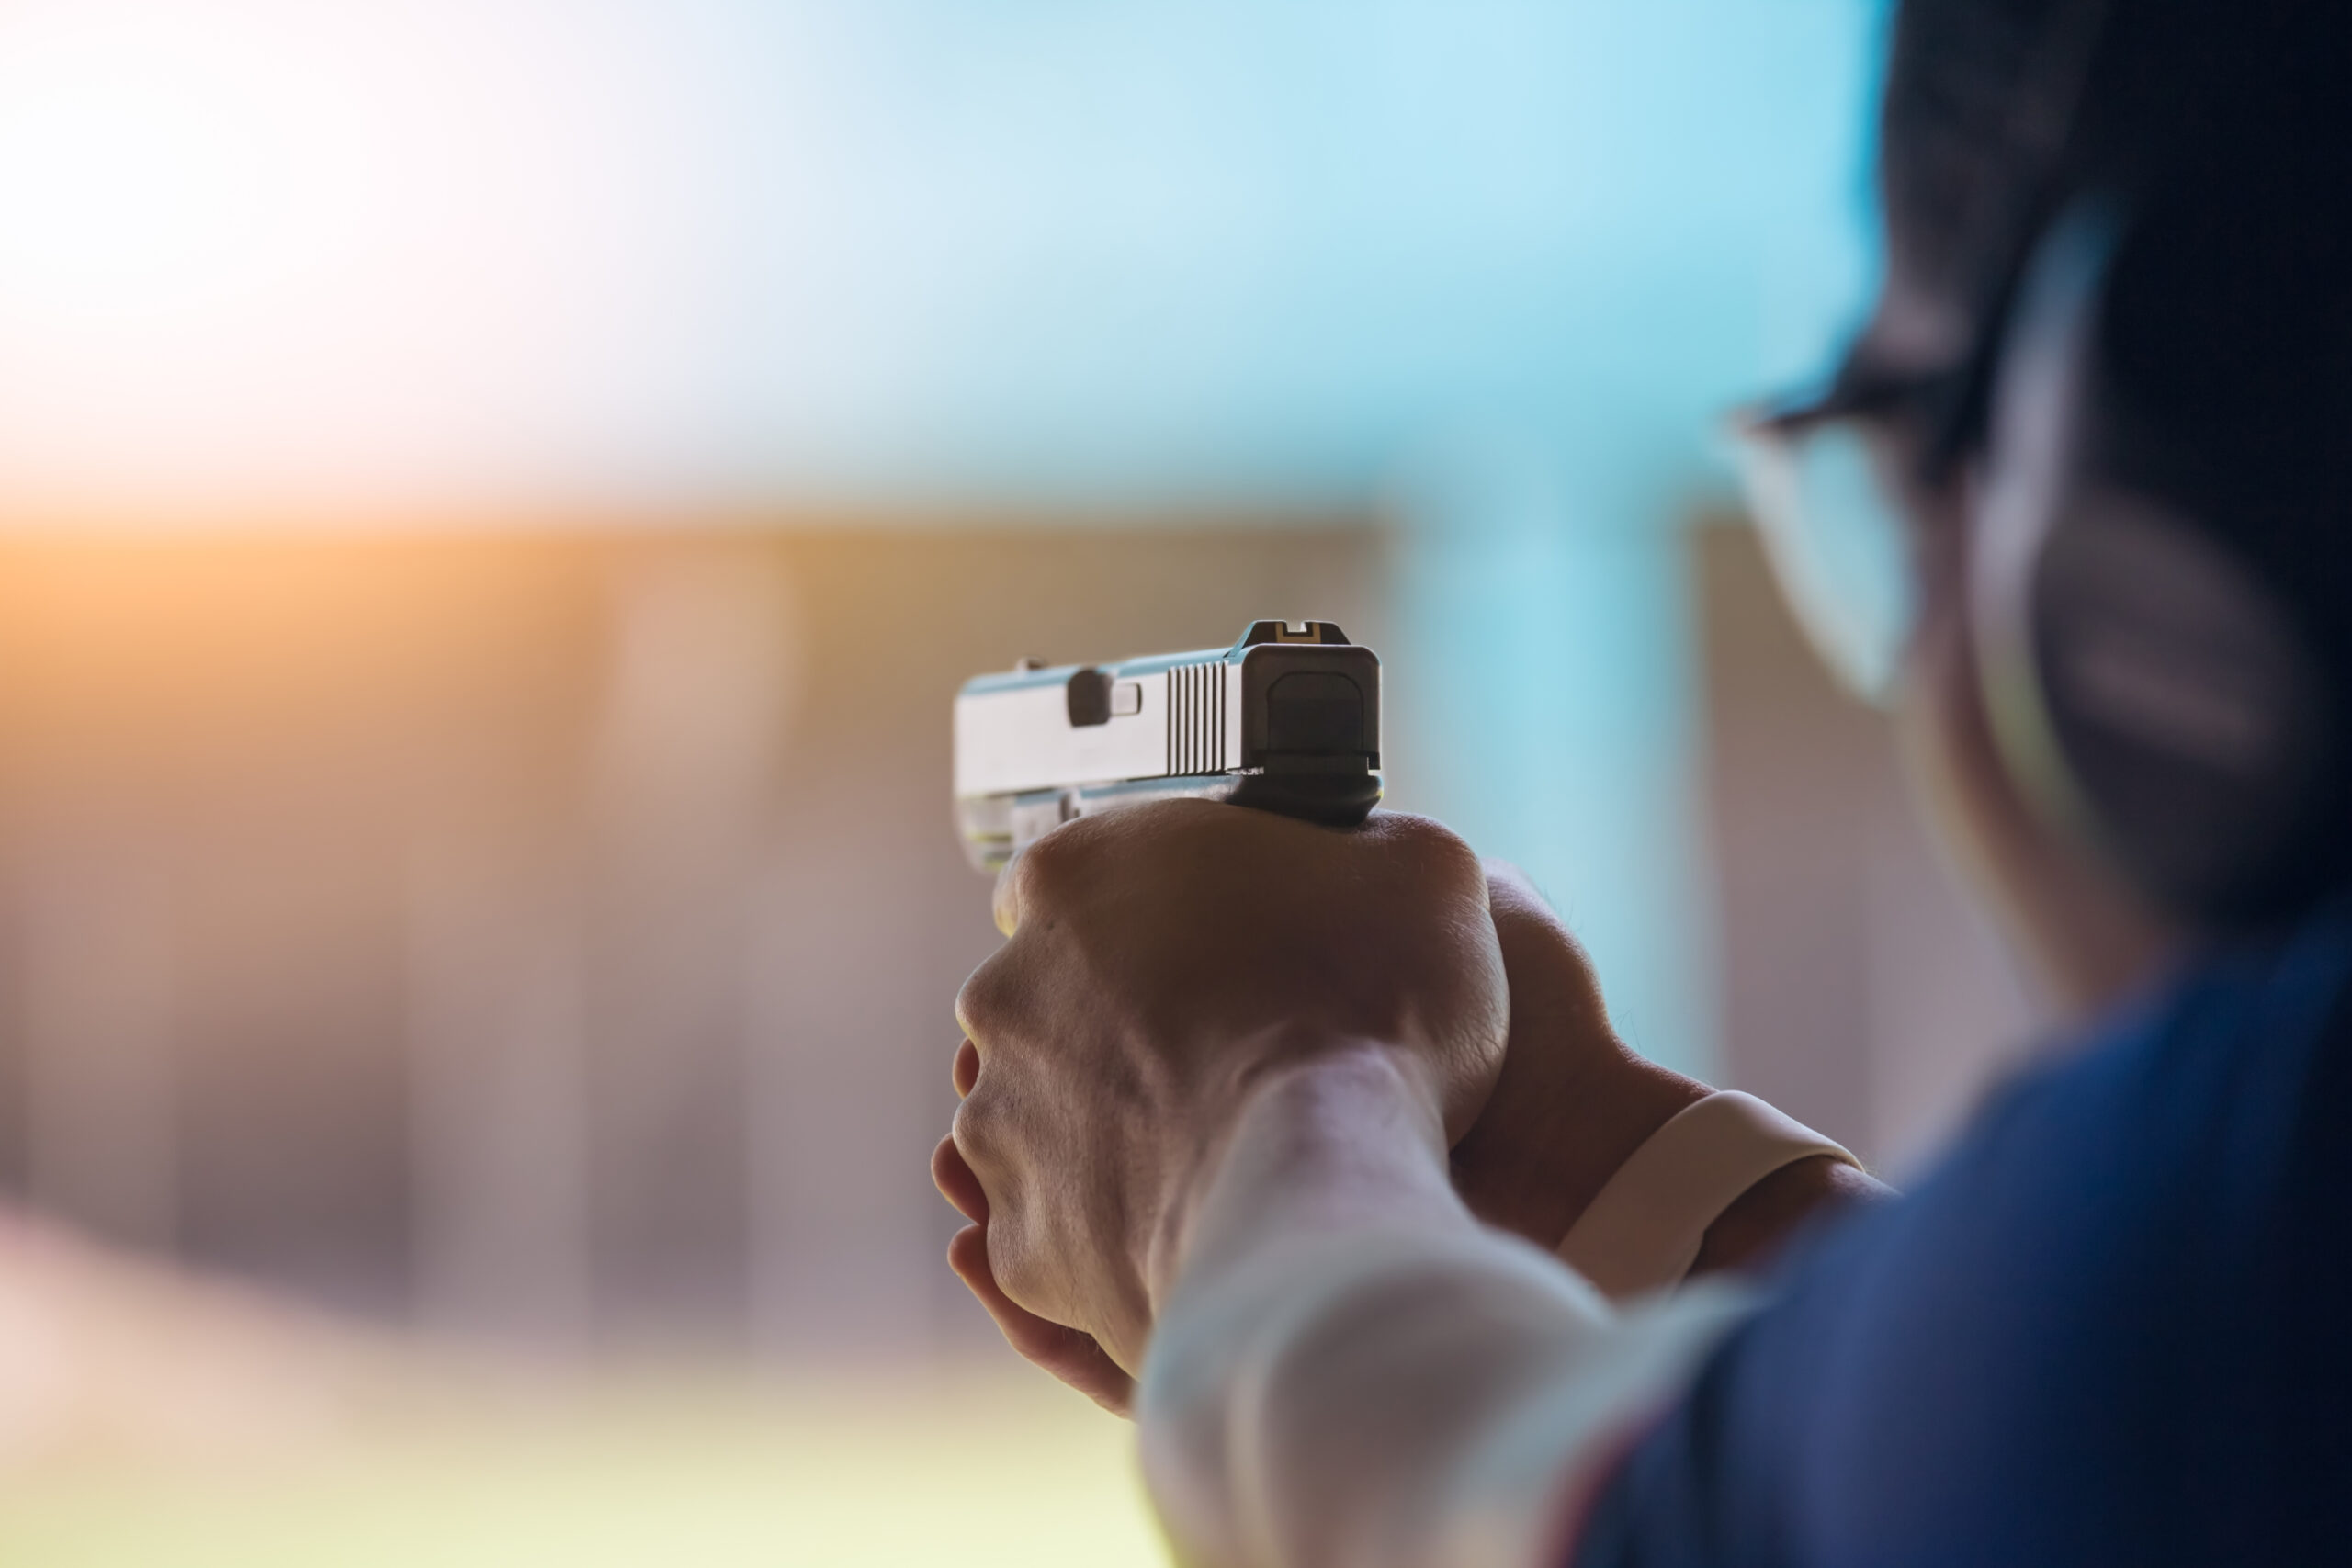 a man shooting a rental gun at a gun range